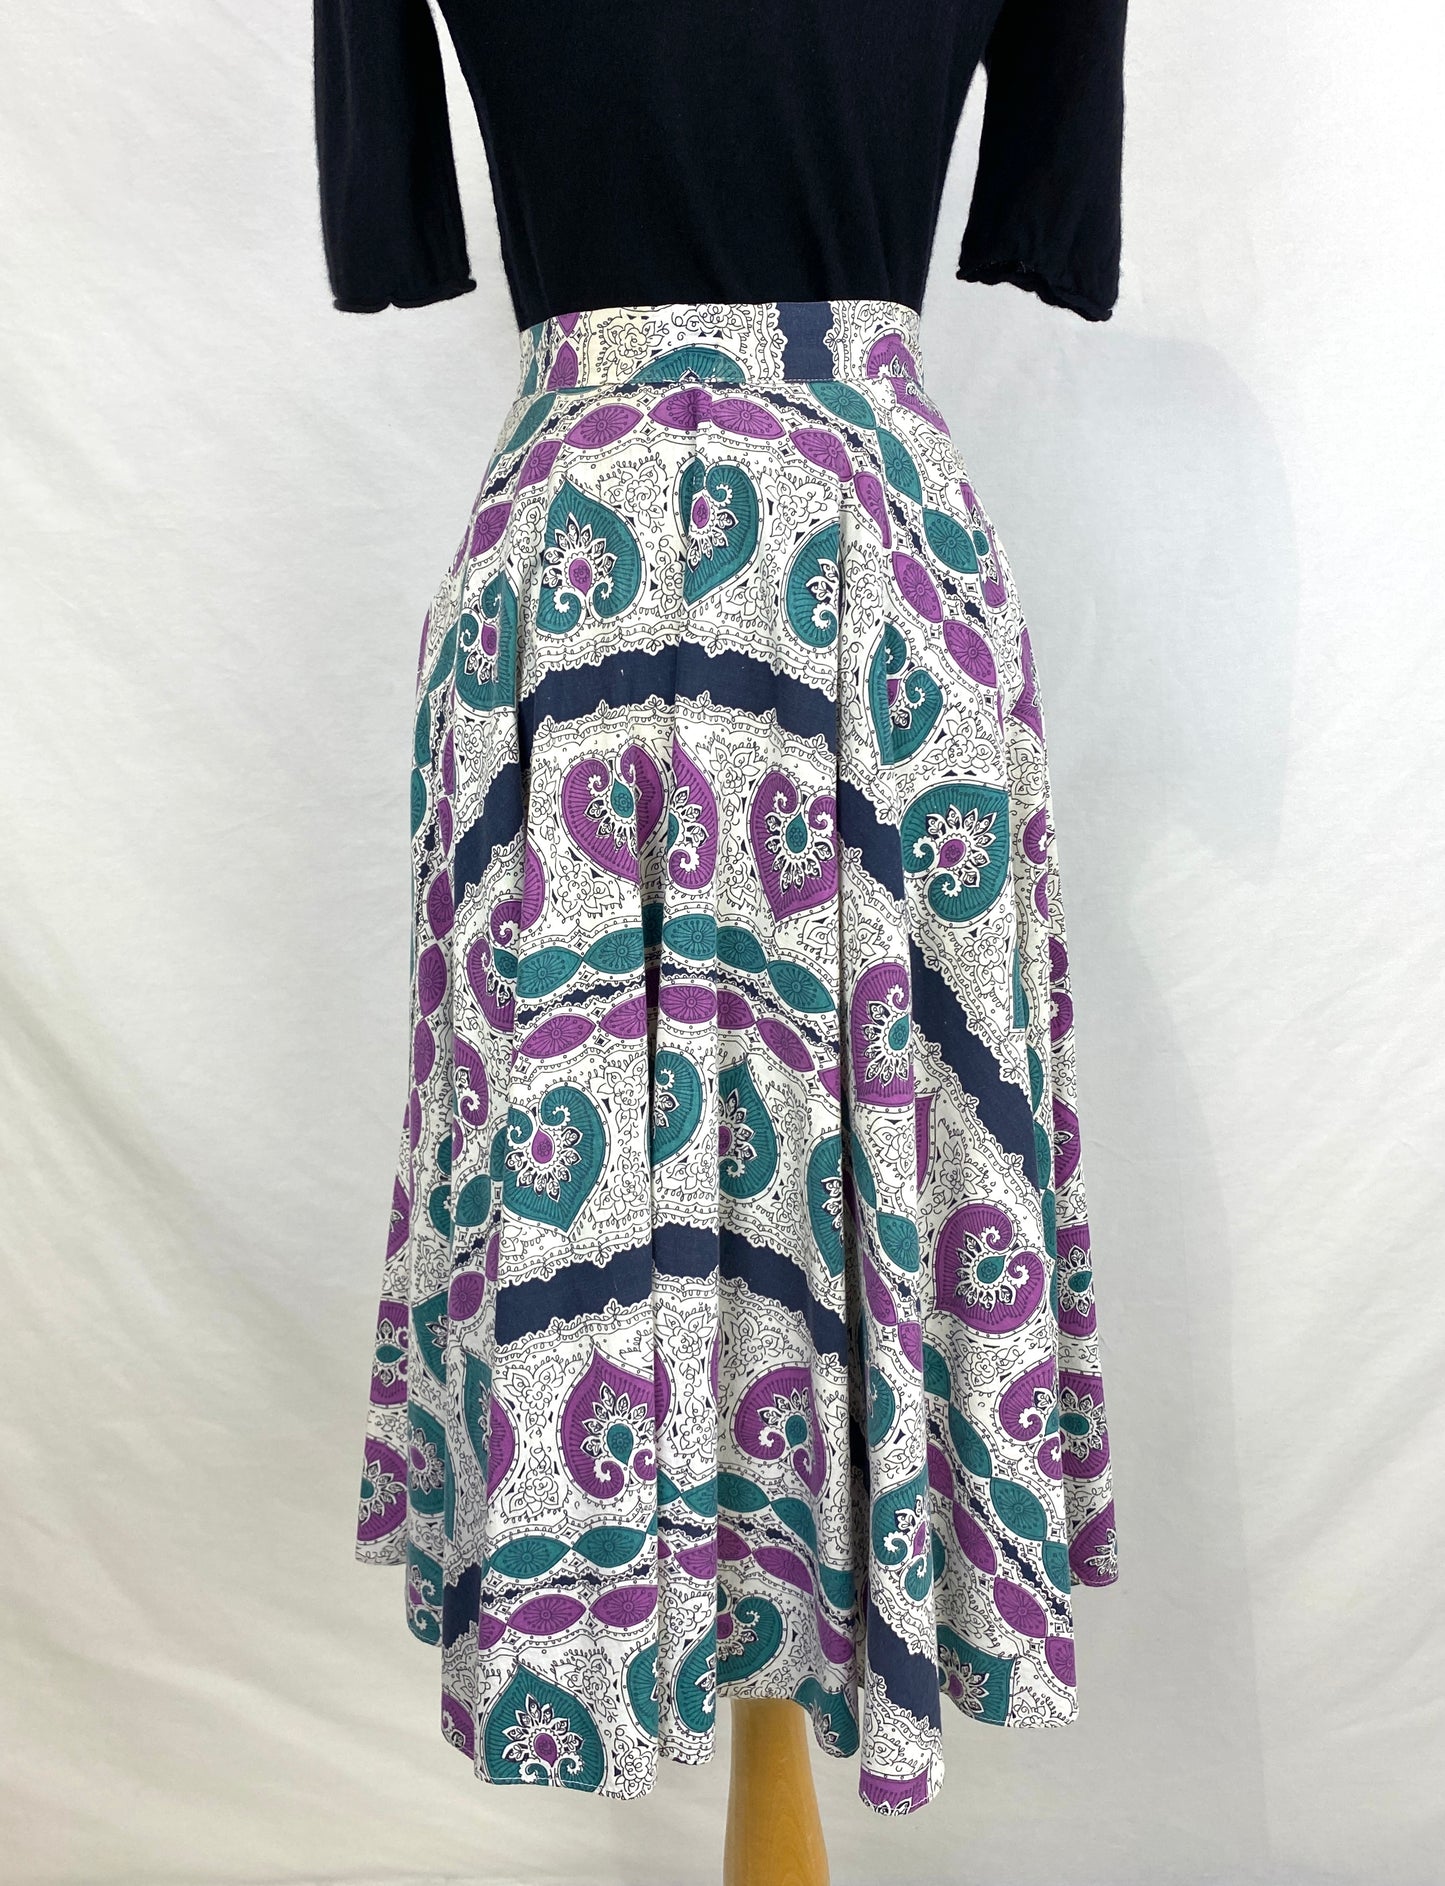 Back view of purple & teal 50 skirt. Ian Drummond Vintage. 